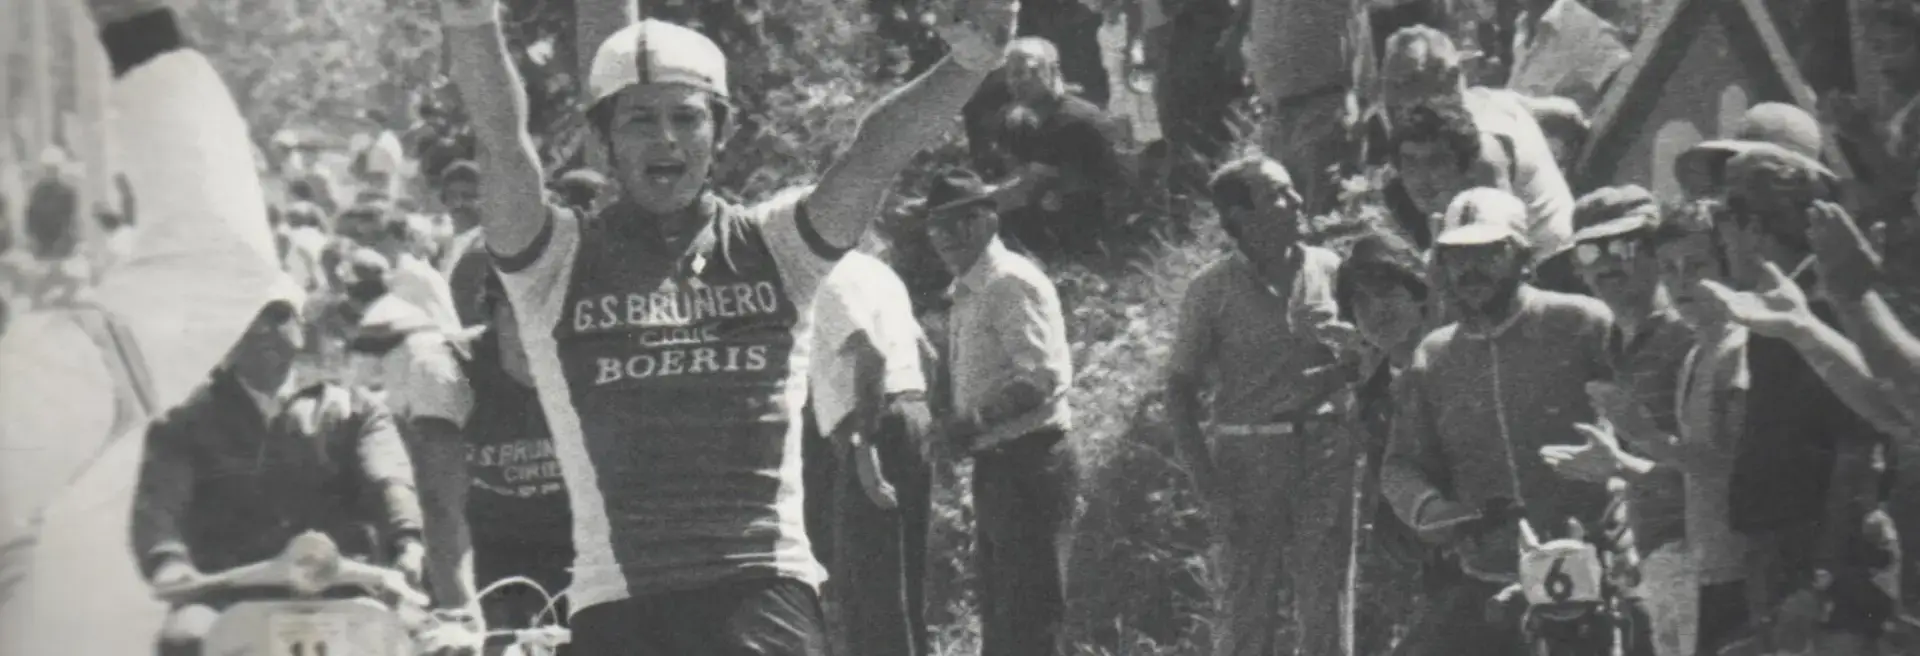 Immagine storica Boeris Bikes Torino vincitore gara dilettantistica con sponsor G.S. Brunero 